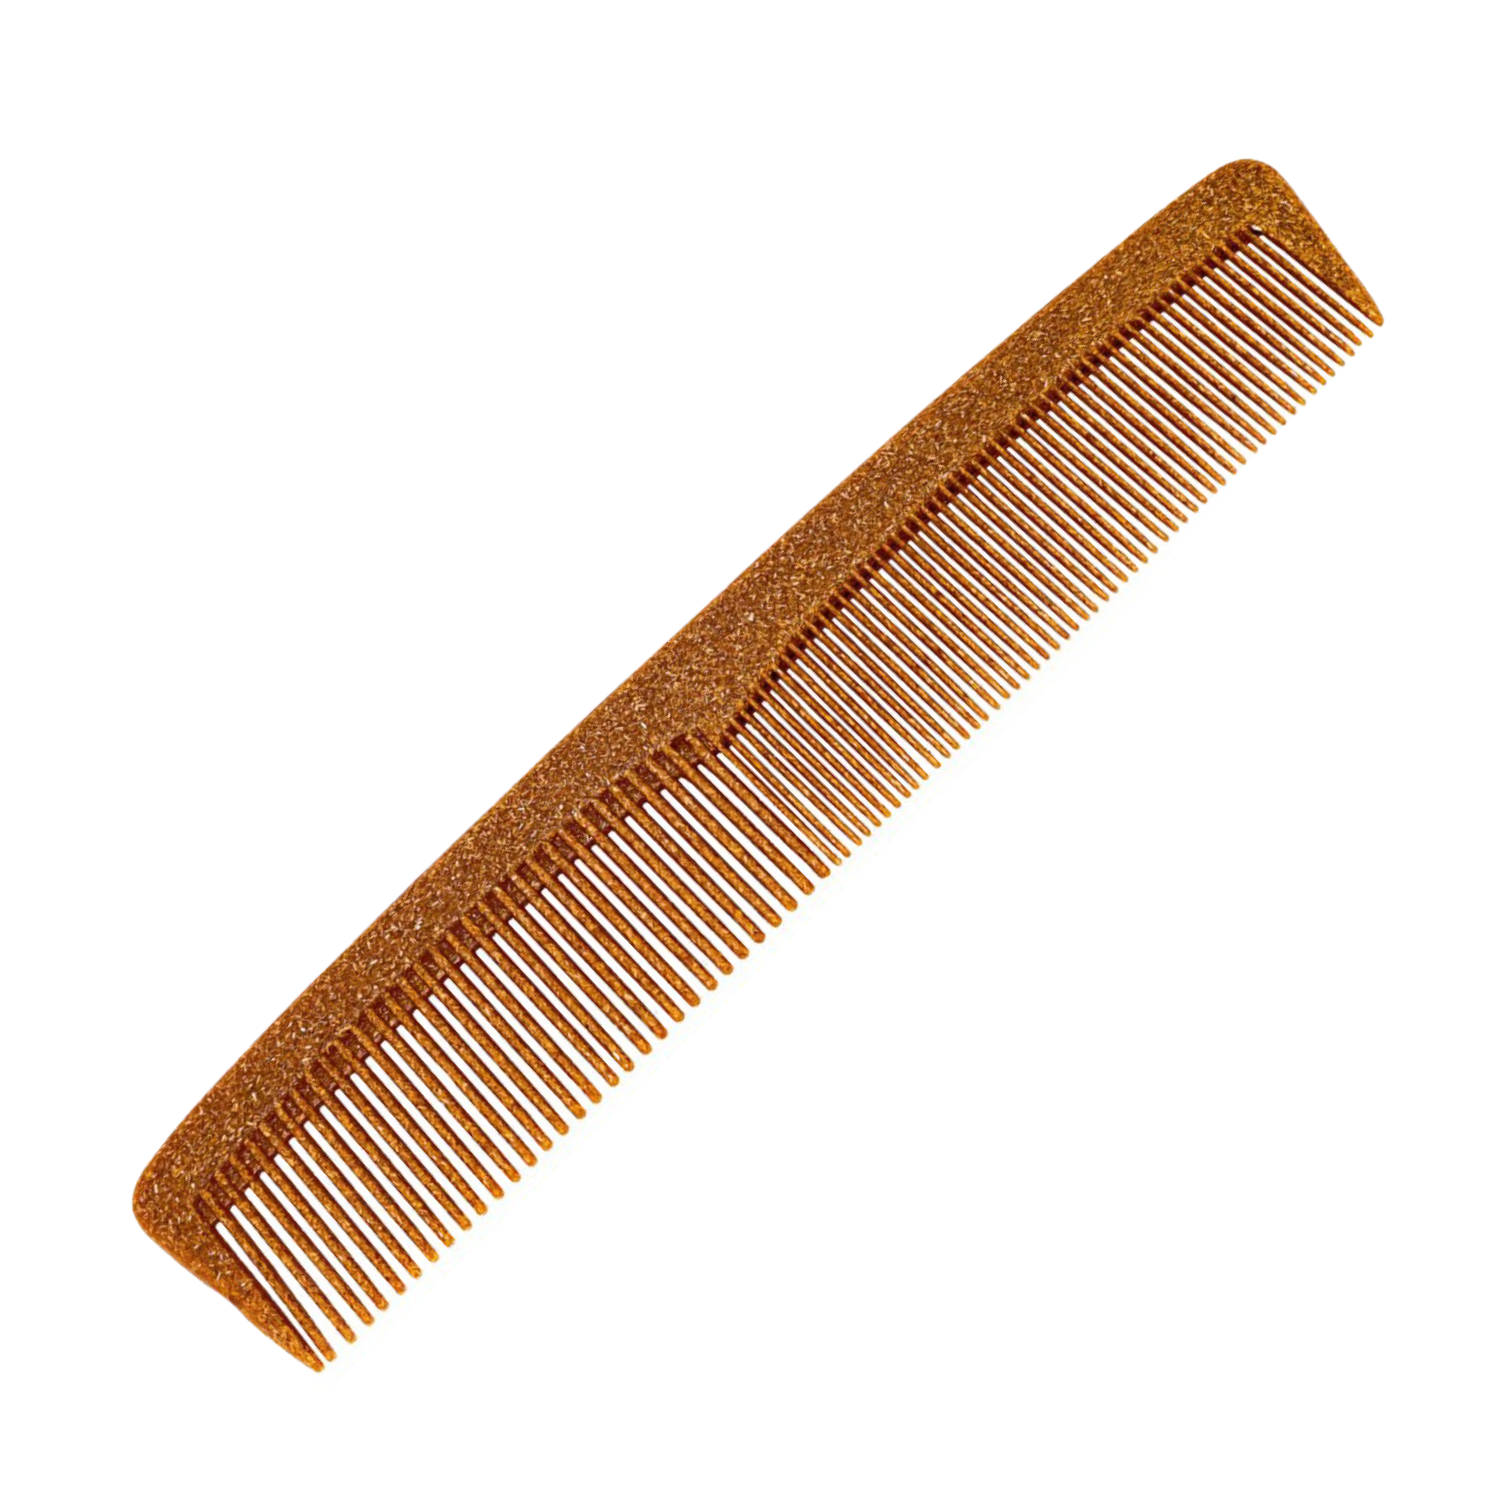 comb plastic free